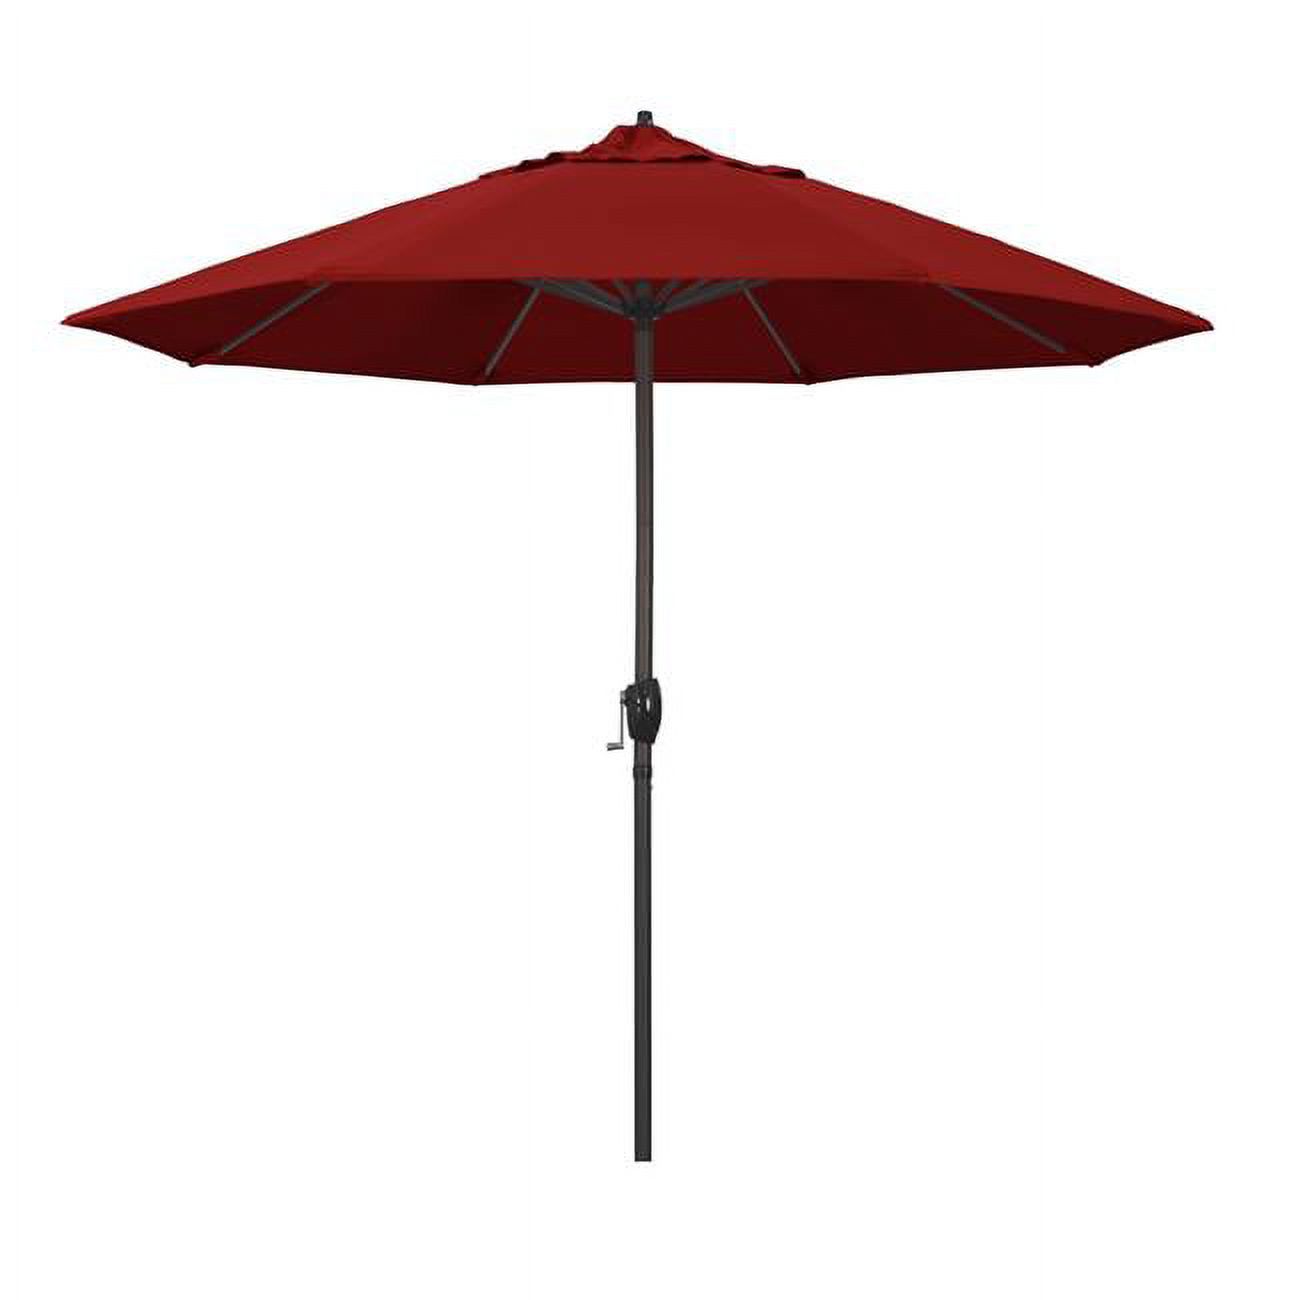 California Umbrella 9' Casa Sunbrella Tilt Crank Lift Patio Umbrella in Red - image 1 of 2